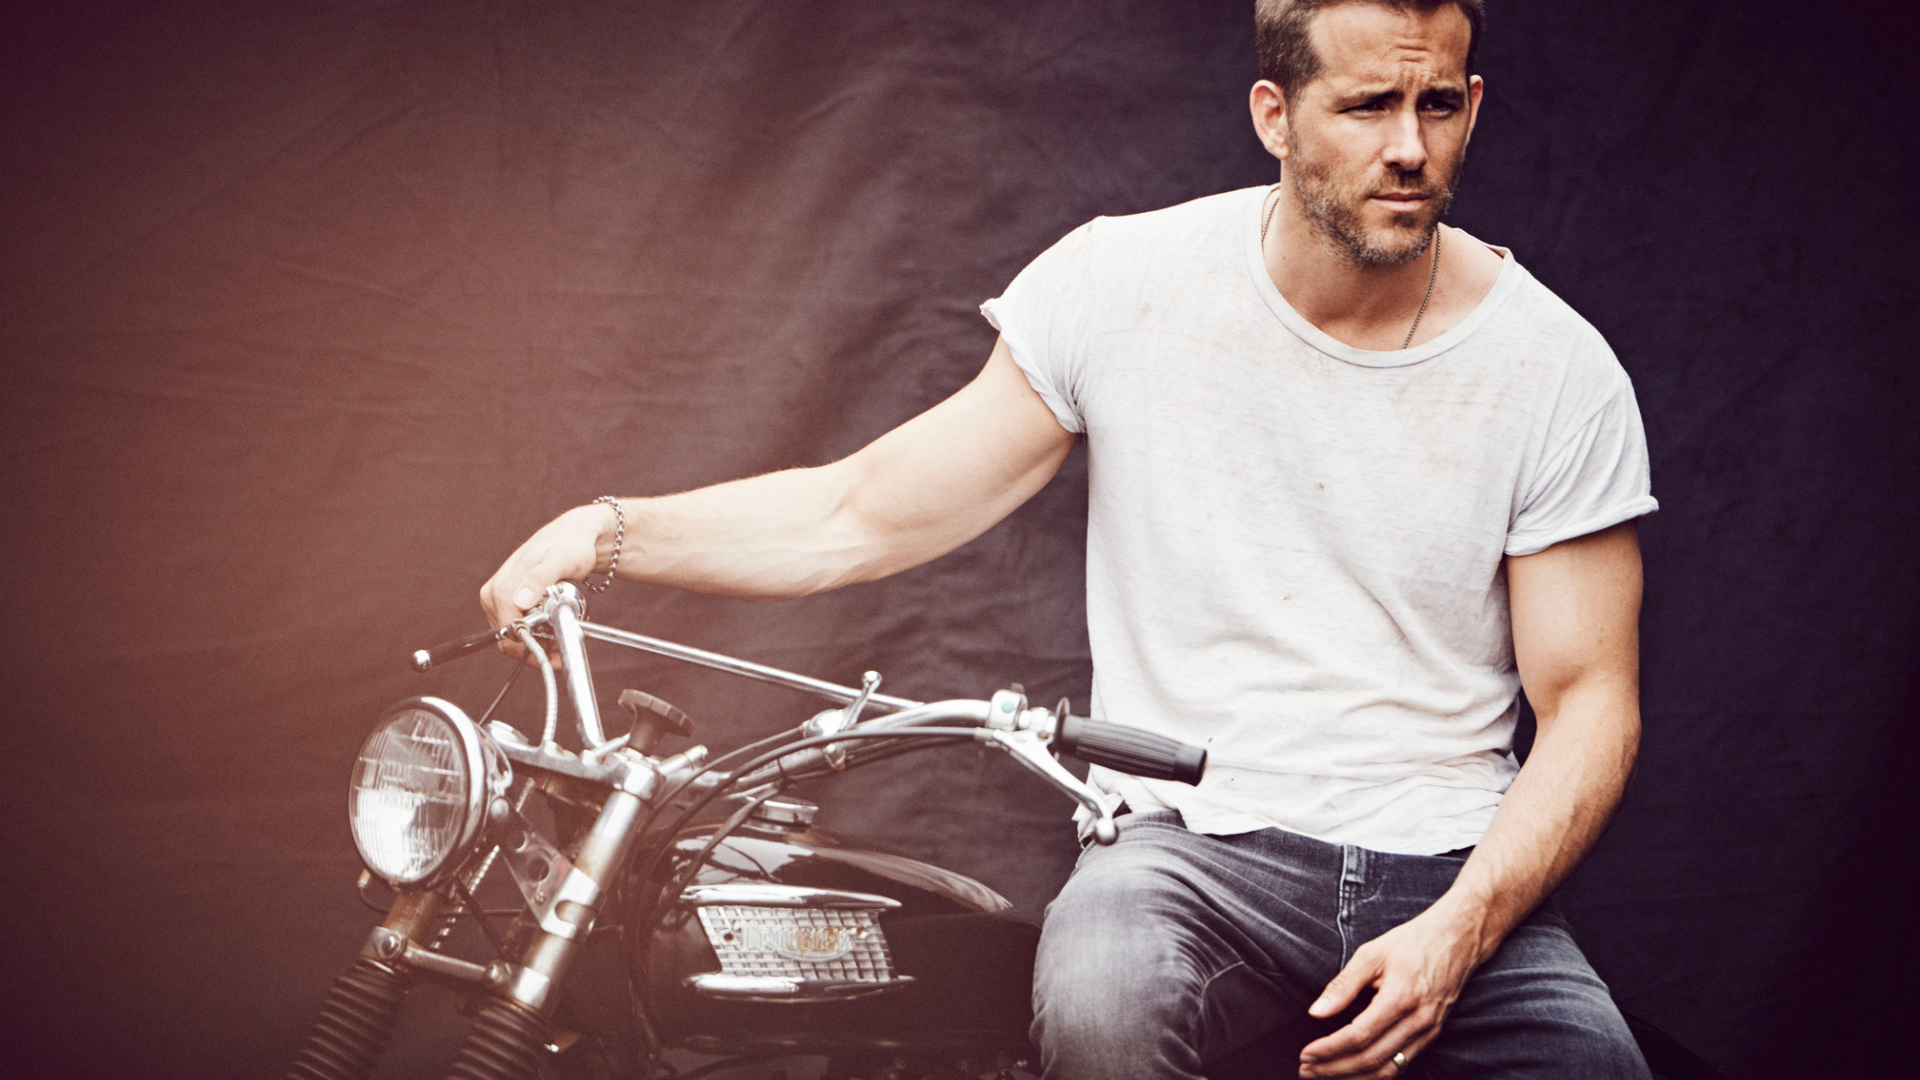 Ryan Reynolds wearing white shirt while sitting on a motorcycle